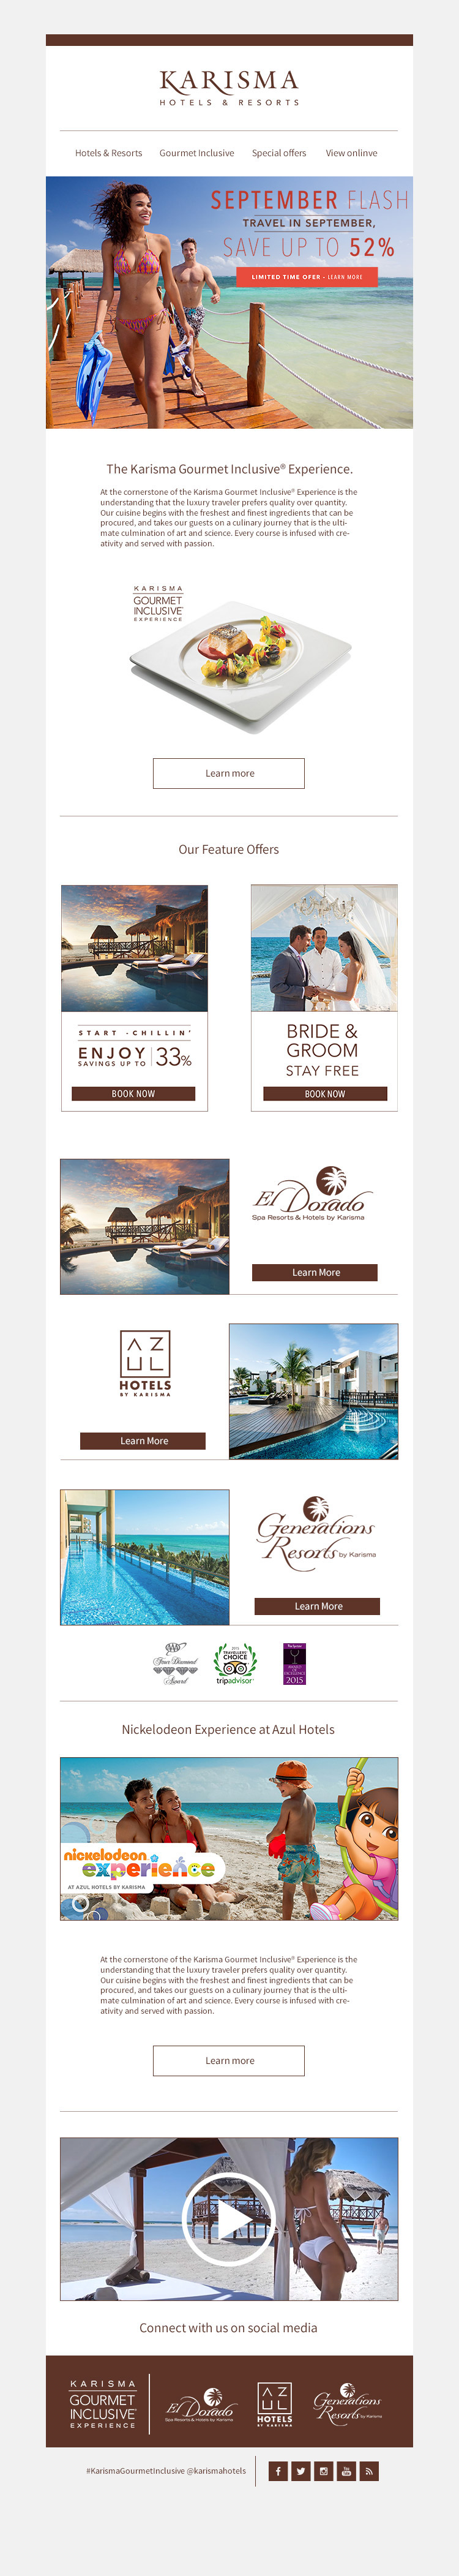 emial Web clean Resorts marketing  